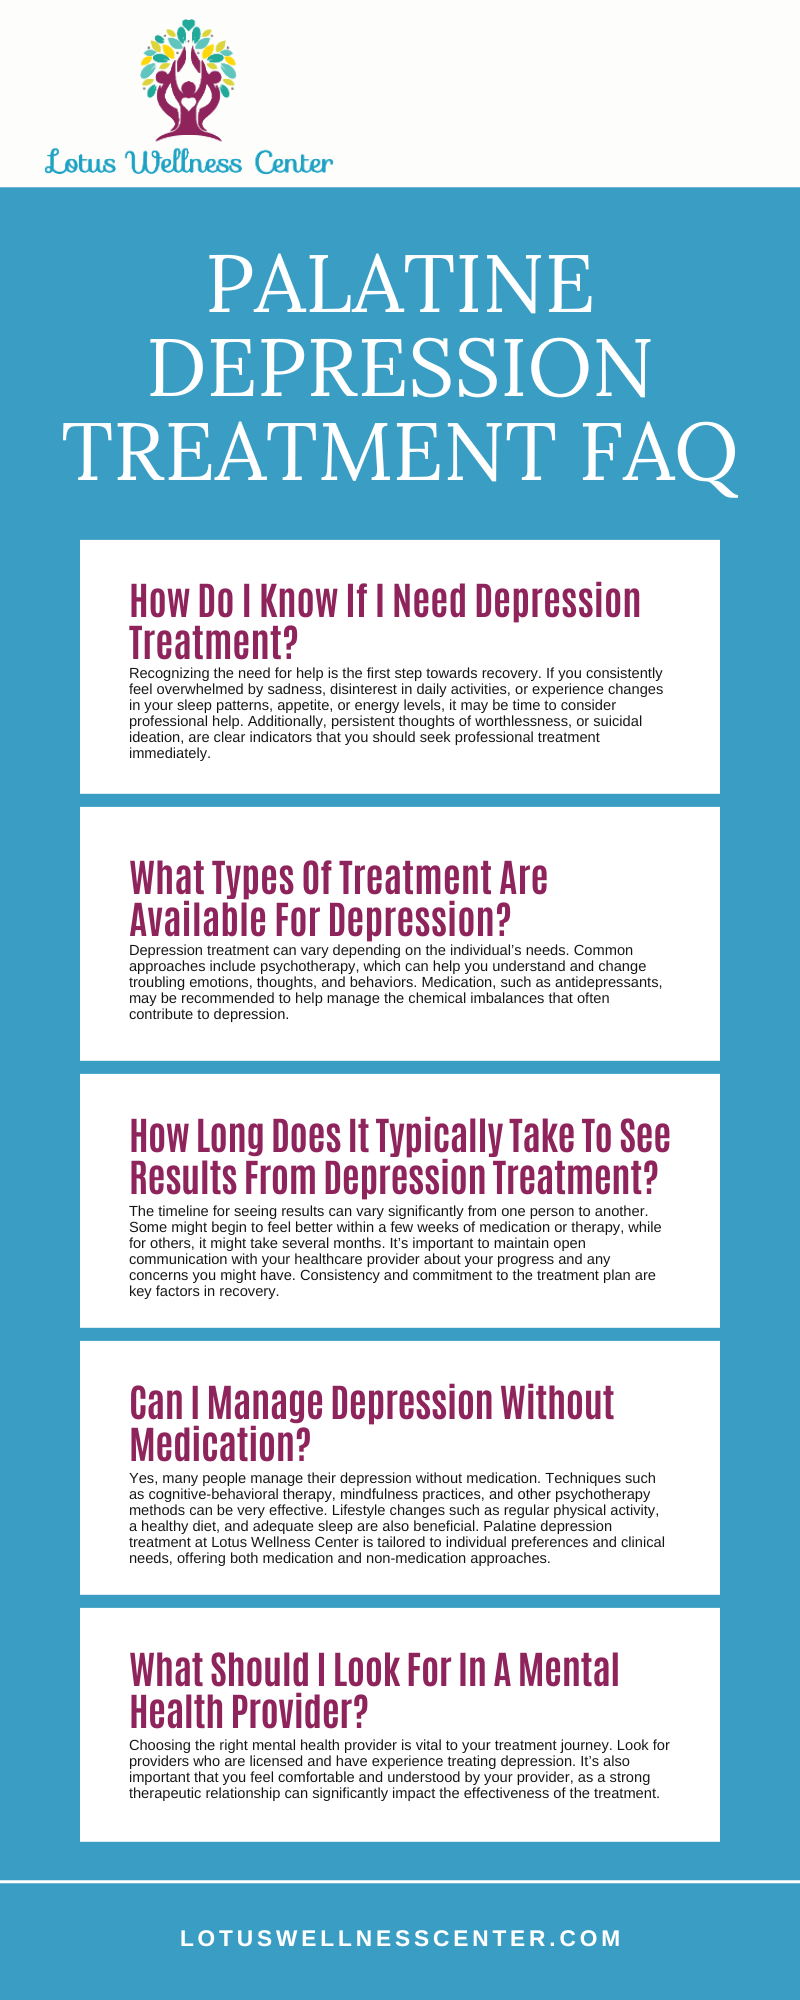 Palatine Depression Treatment FAQ Infographic